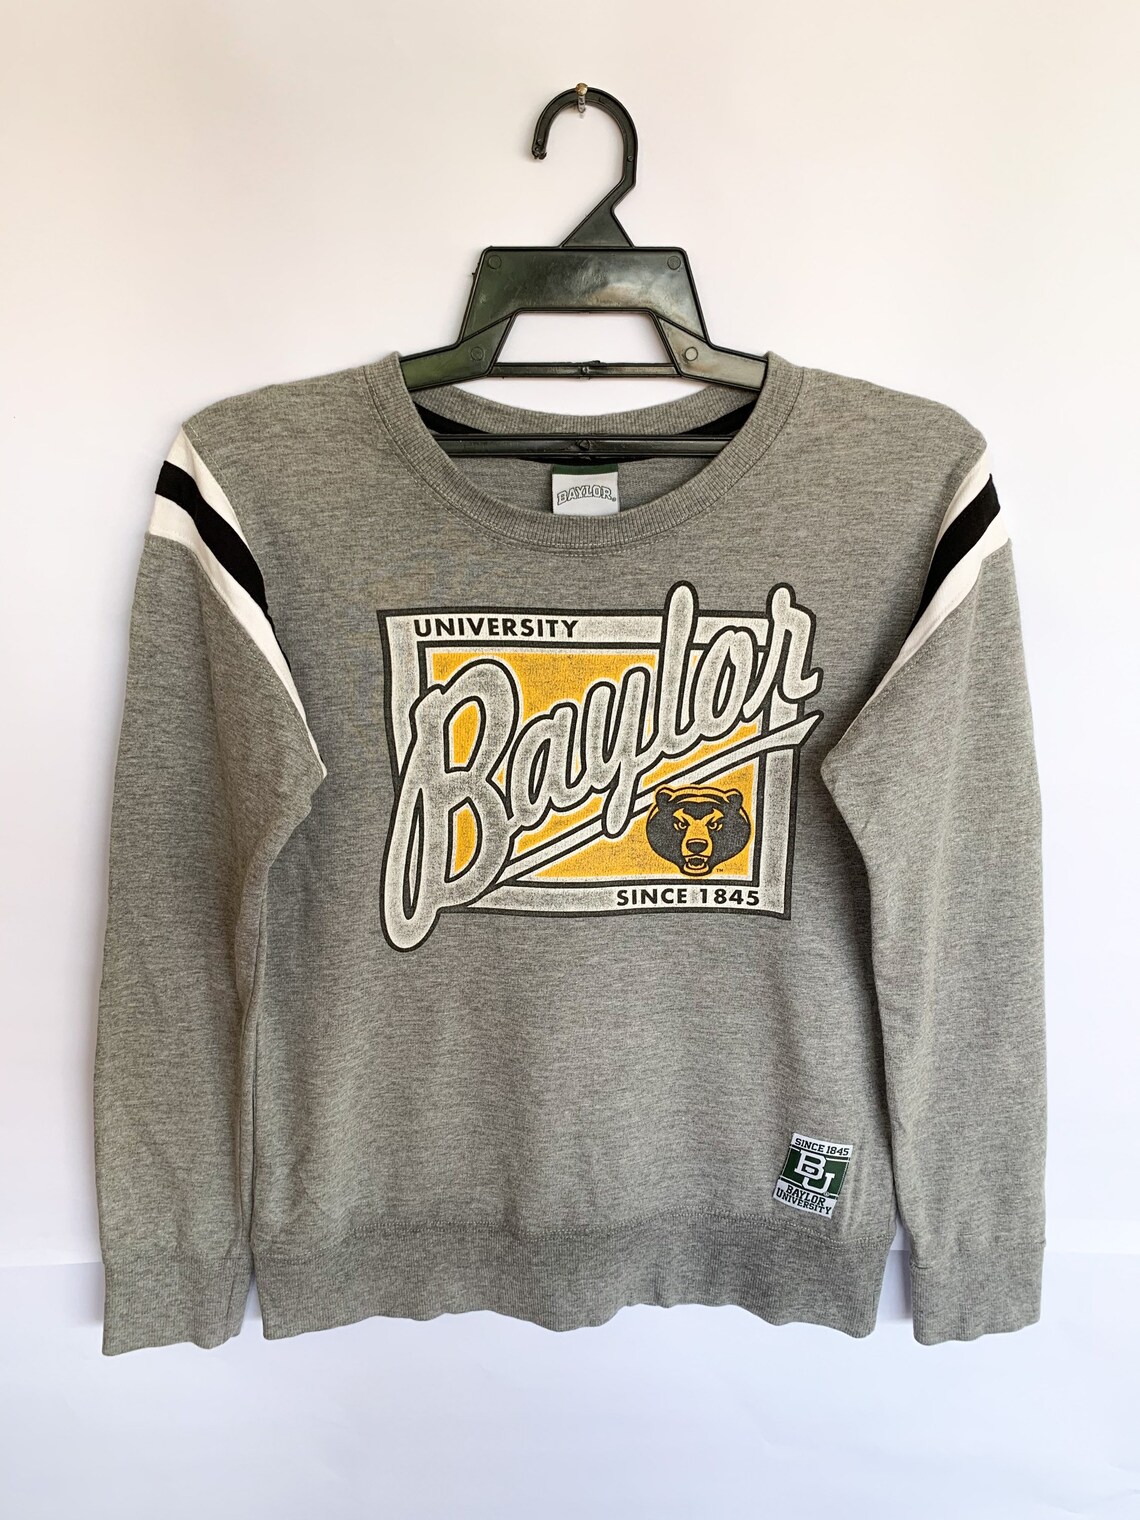 Baylor University Sweatshirt Small Size Grey Color | Etsy